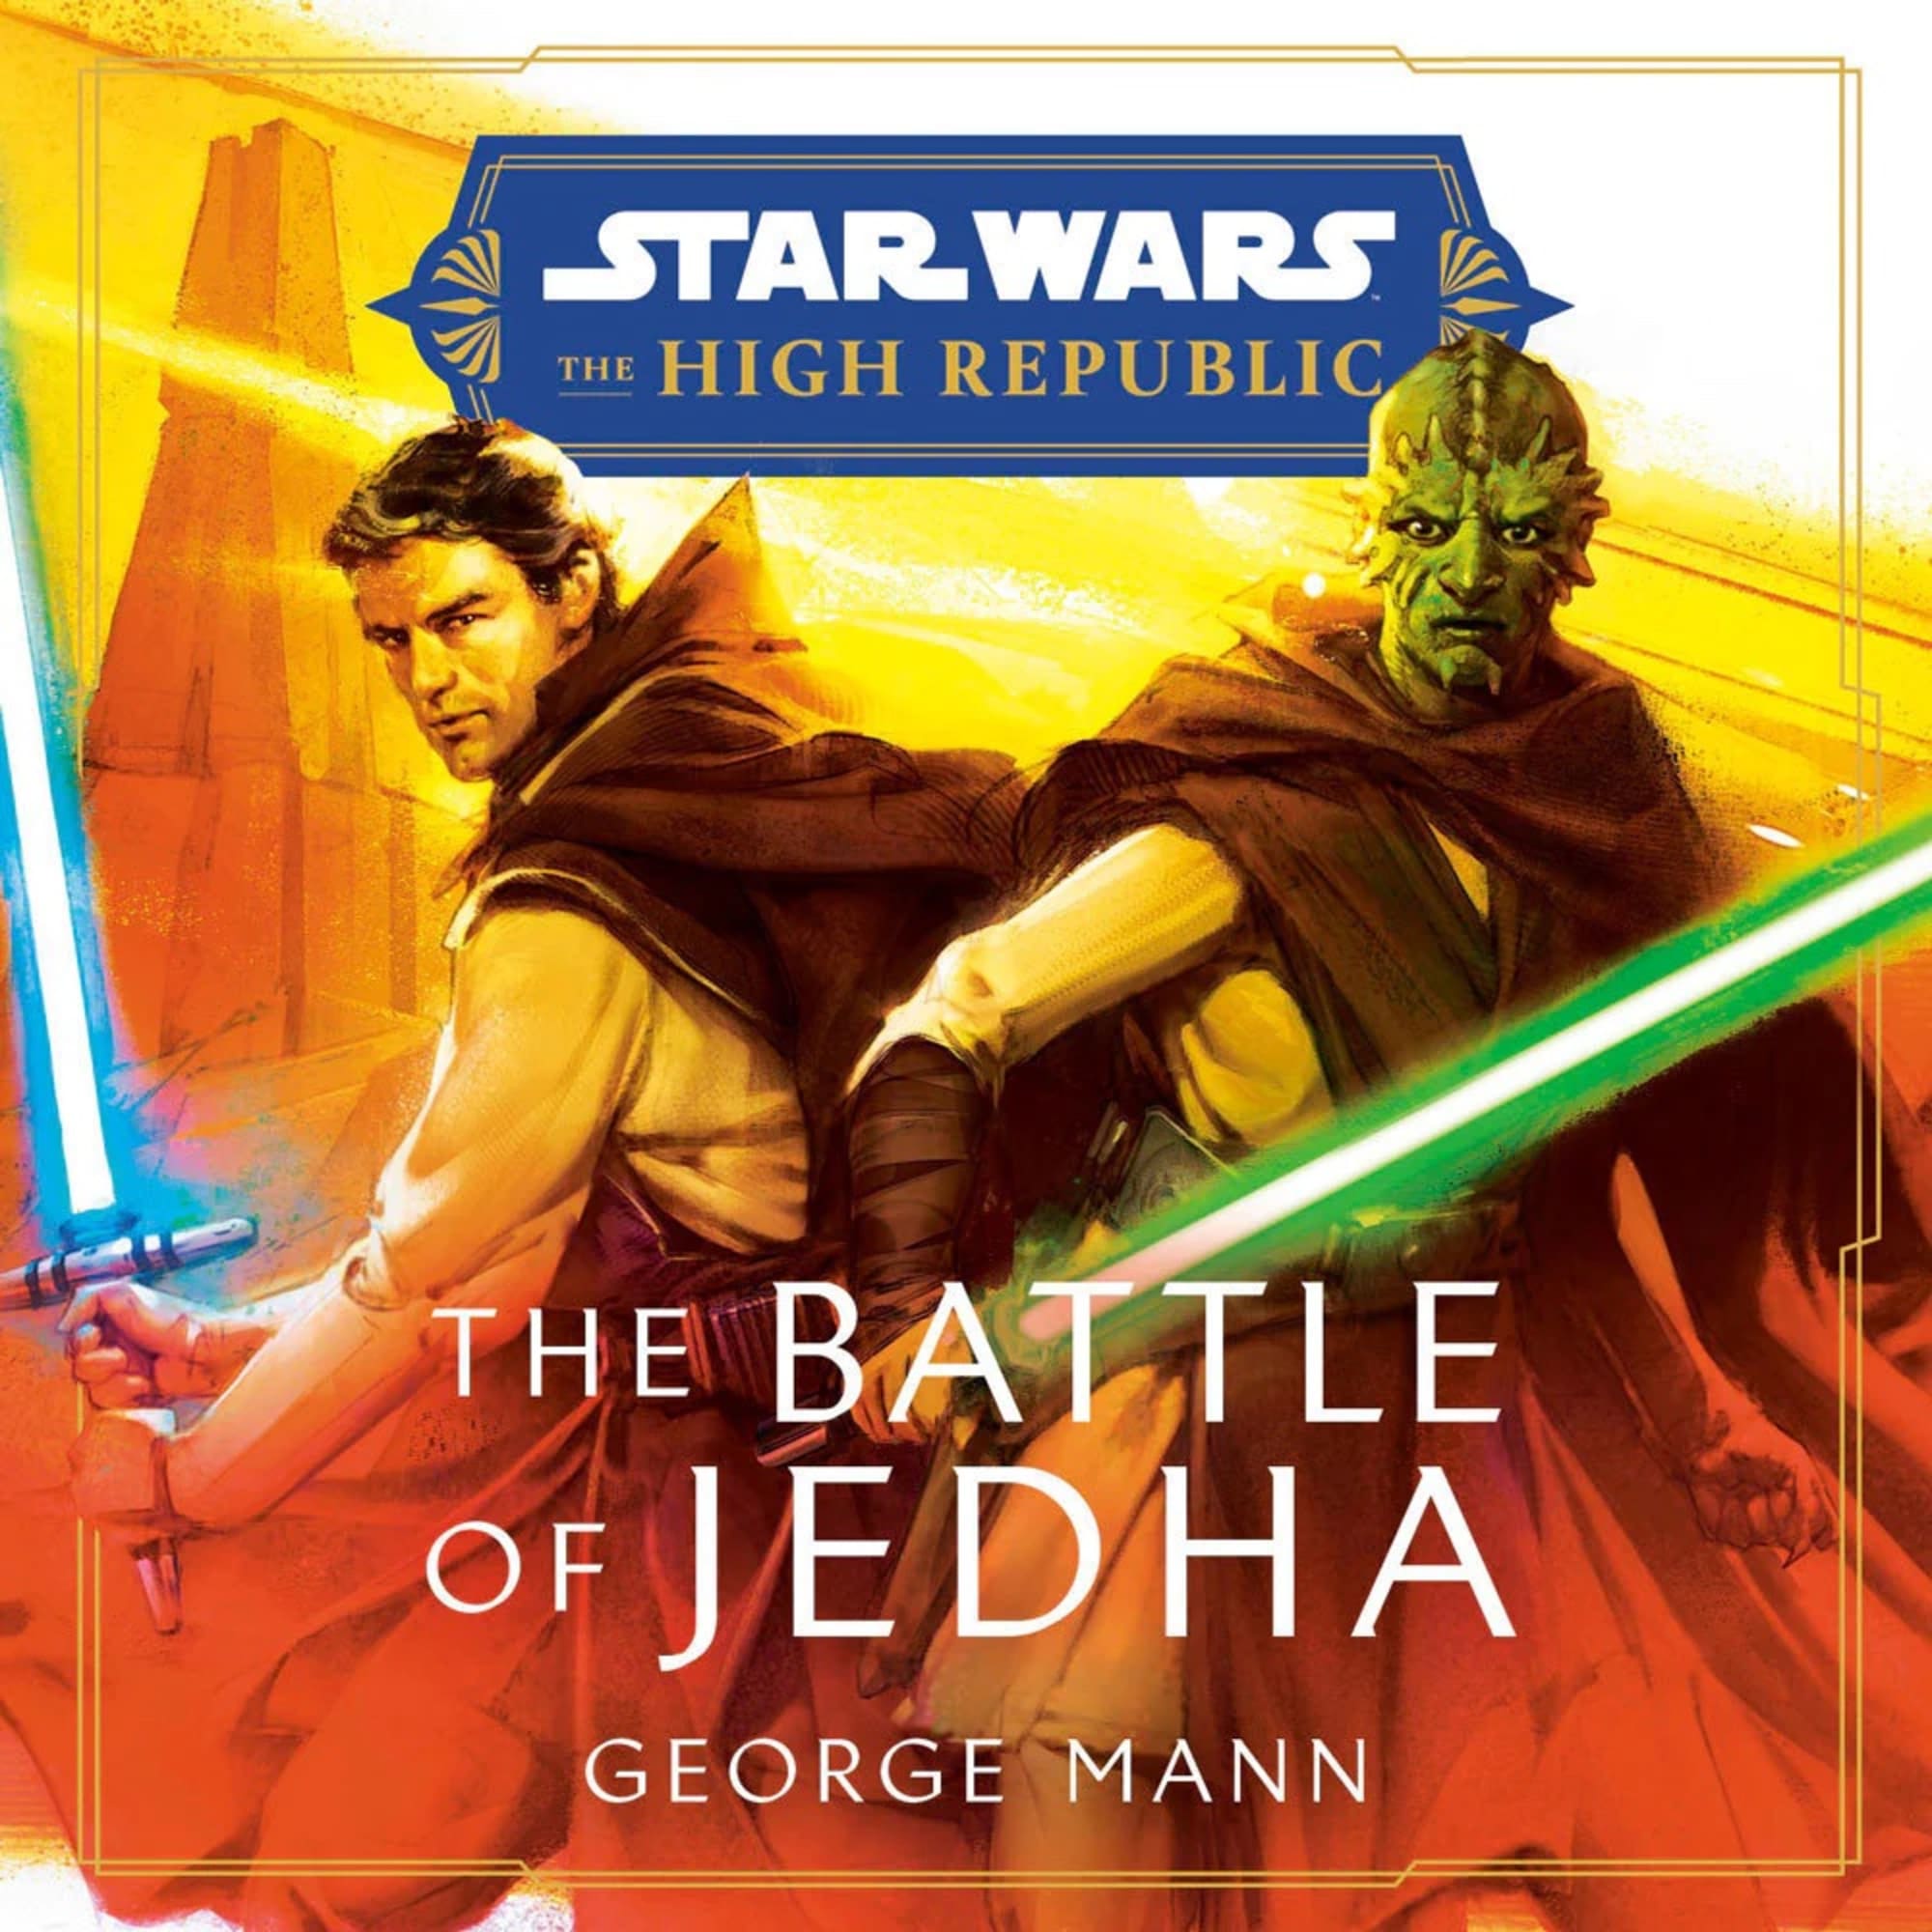 Light of the Jedi Star Wars: The High Republic by Charles Soule - Star  Wars: The High Republic - Lucasfilm, Star Wars Books